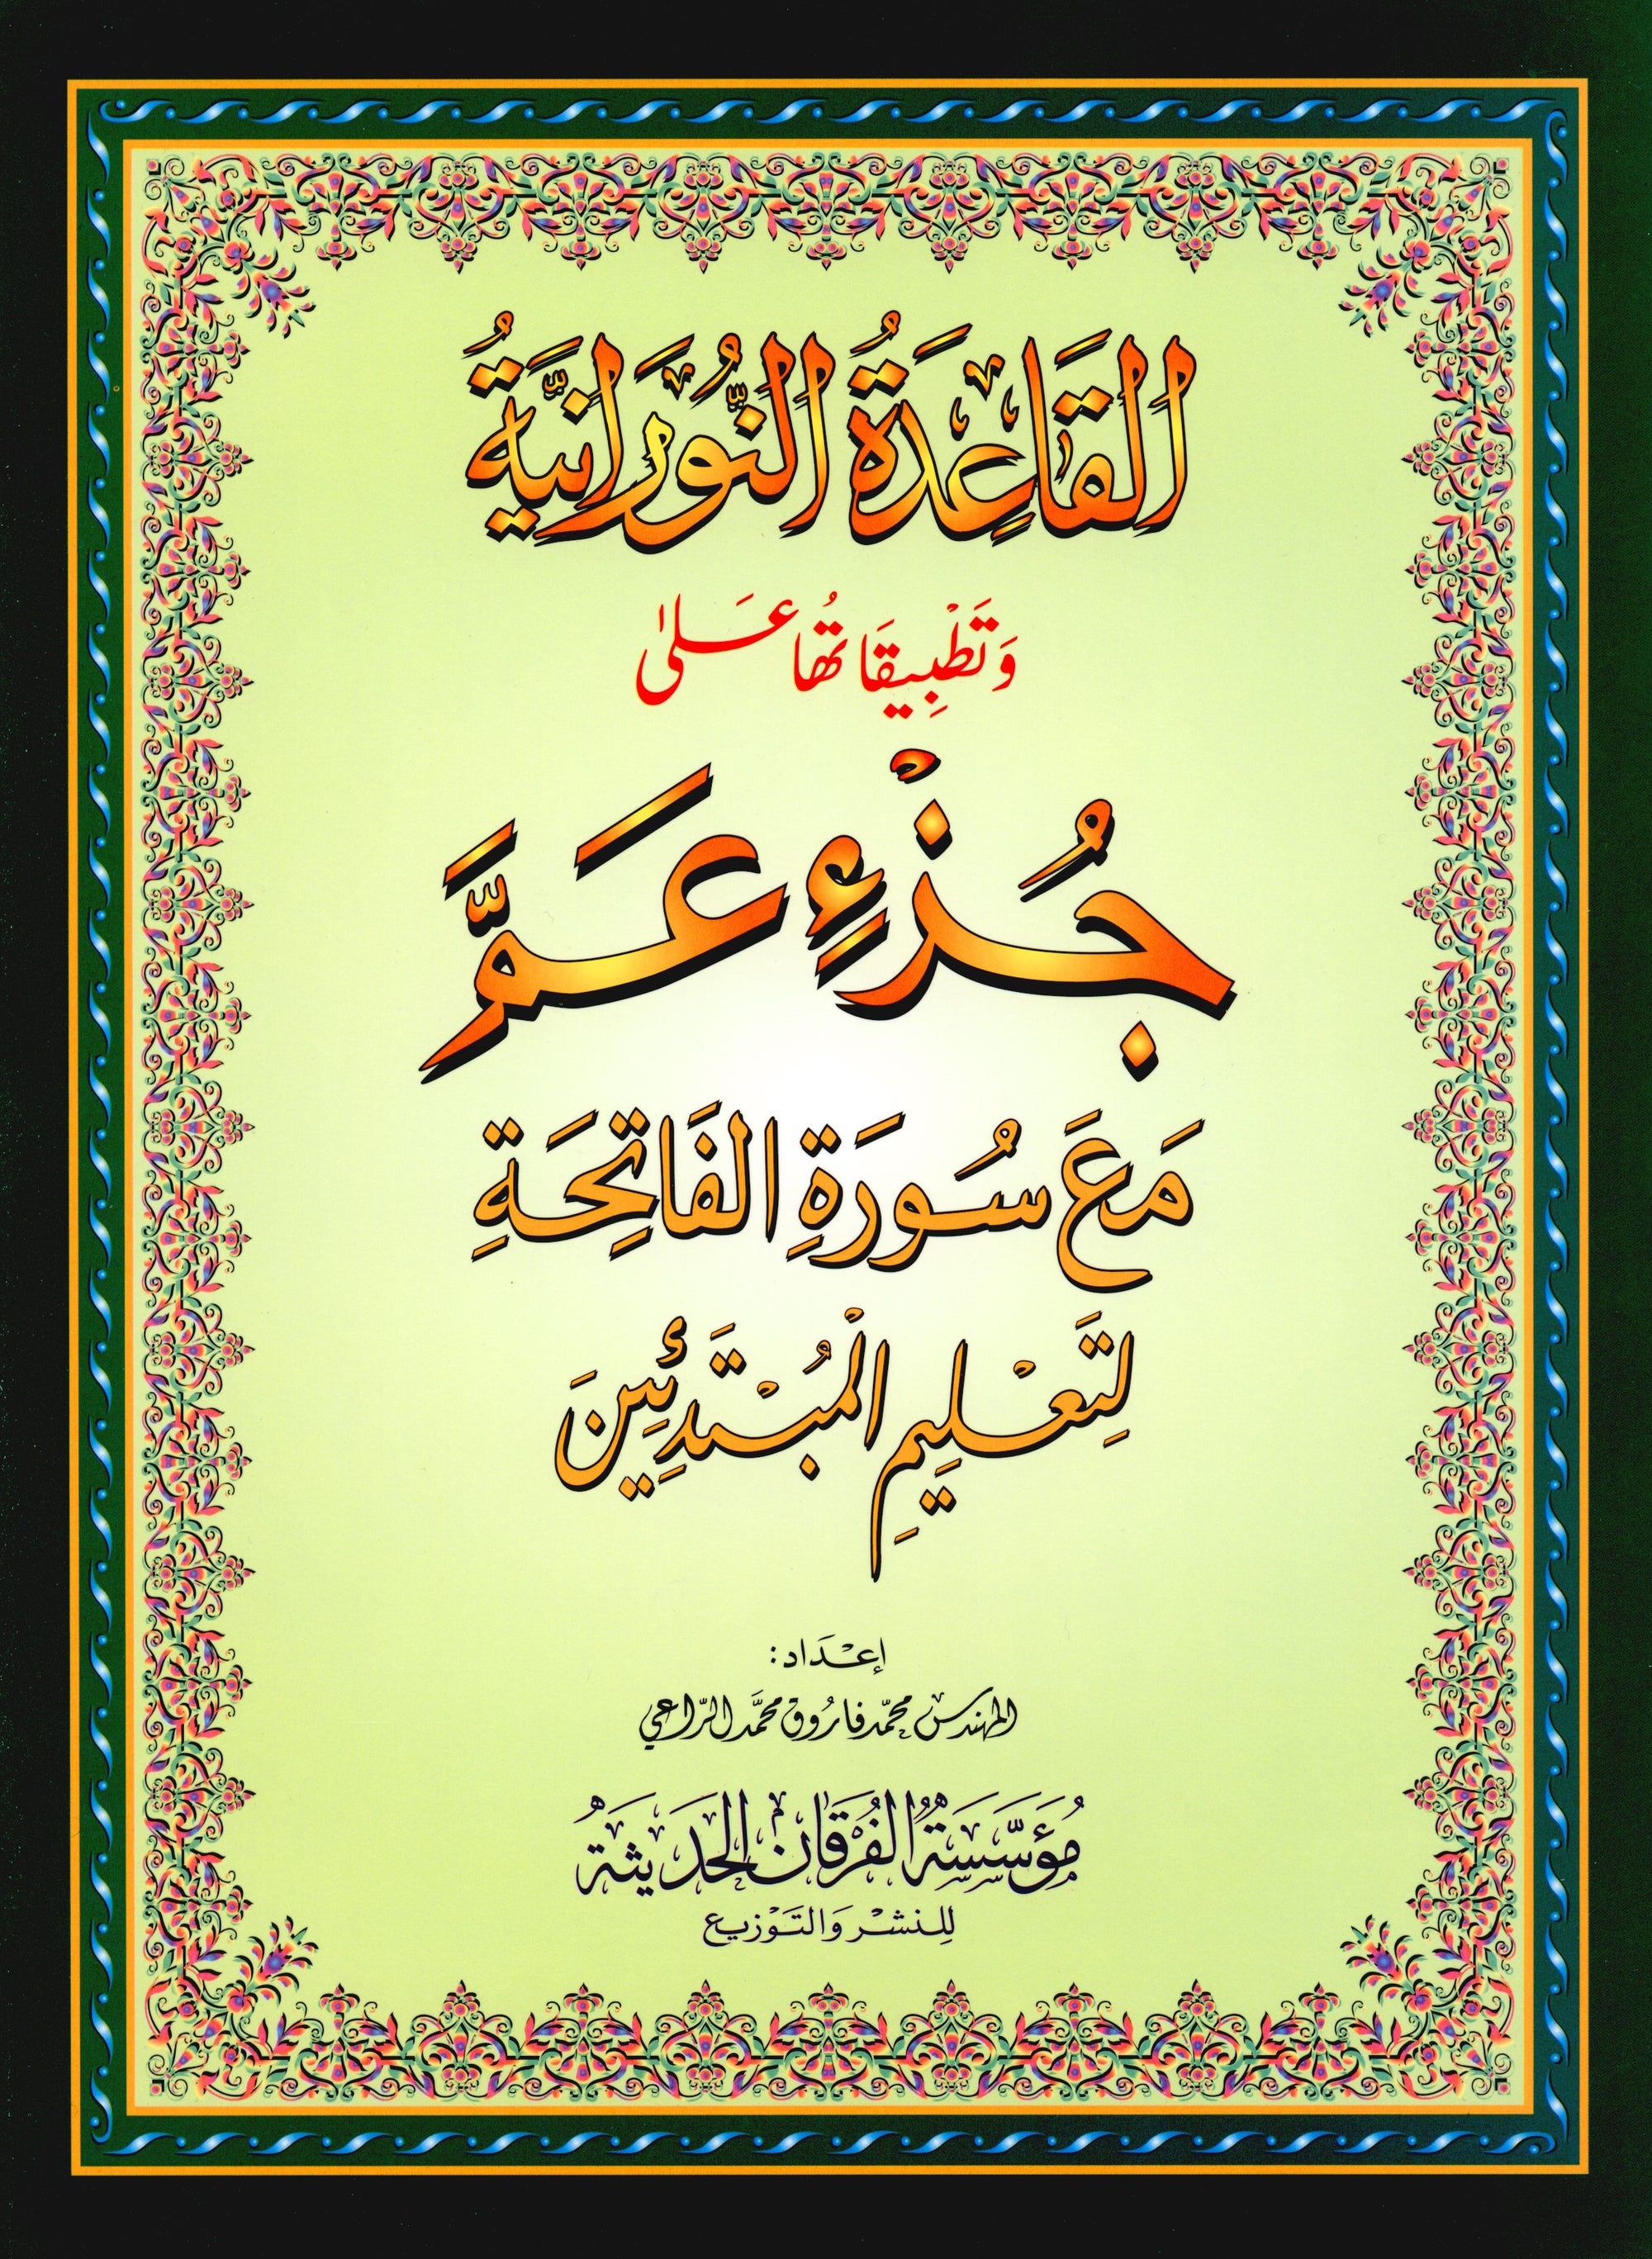 Al-Qaidah An-Noraniah - Juz’ Amma & Suratul-Fatihah for Beginners Small Size 5 x 8 جزء عم مع سورة الفاتحة للمبتدئين